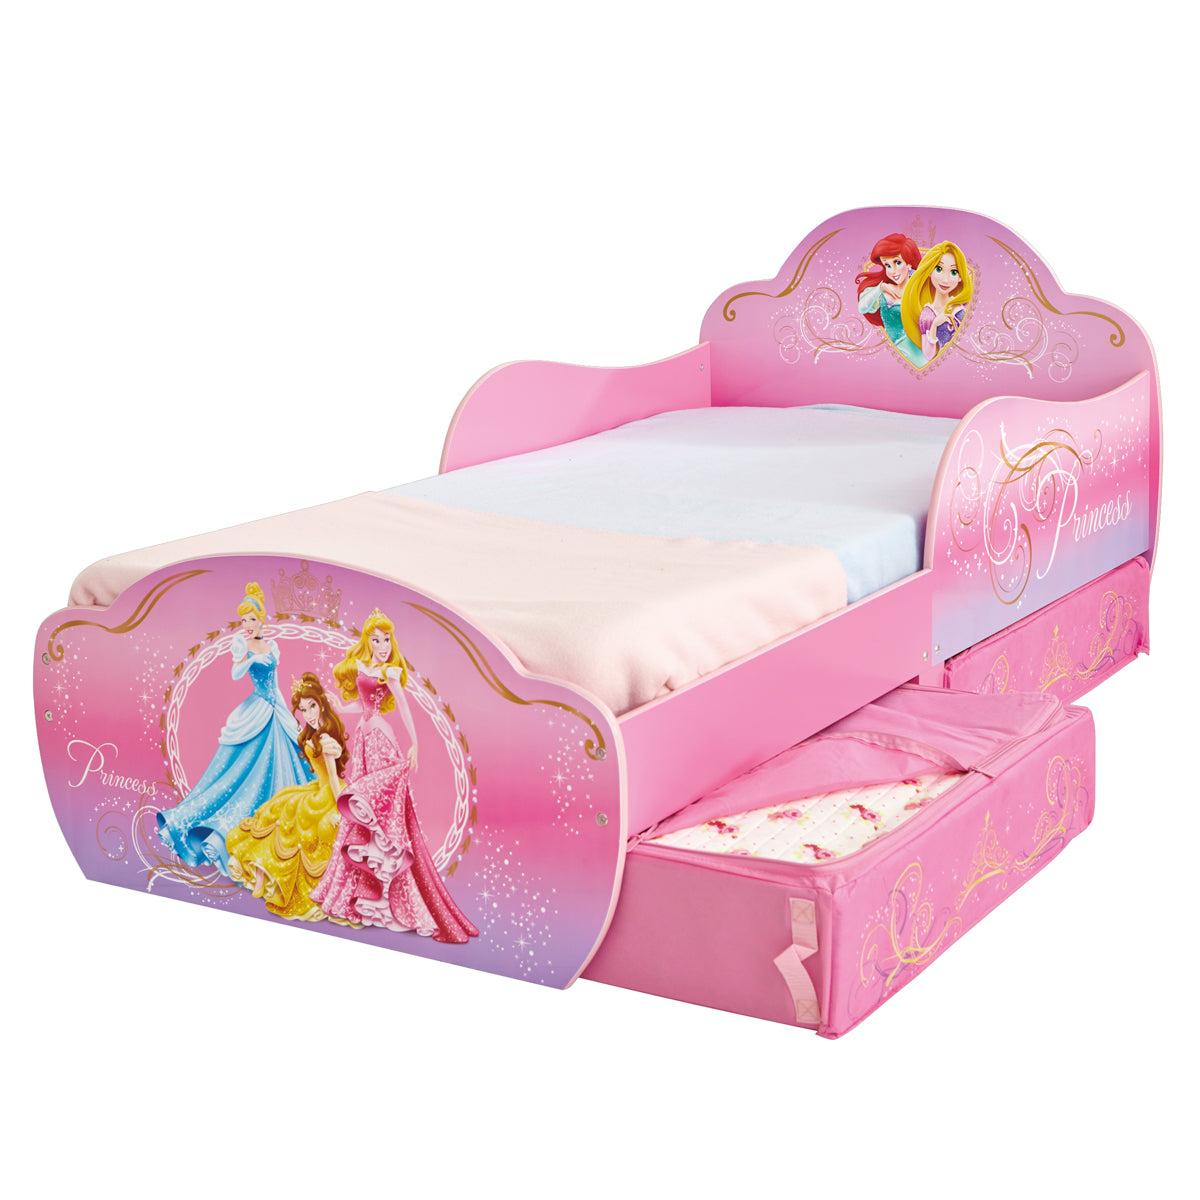 Disney Princess Kids Toddler Bed